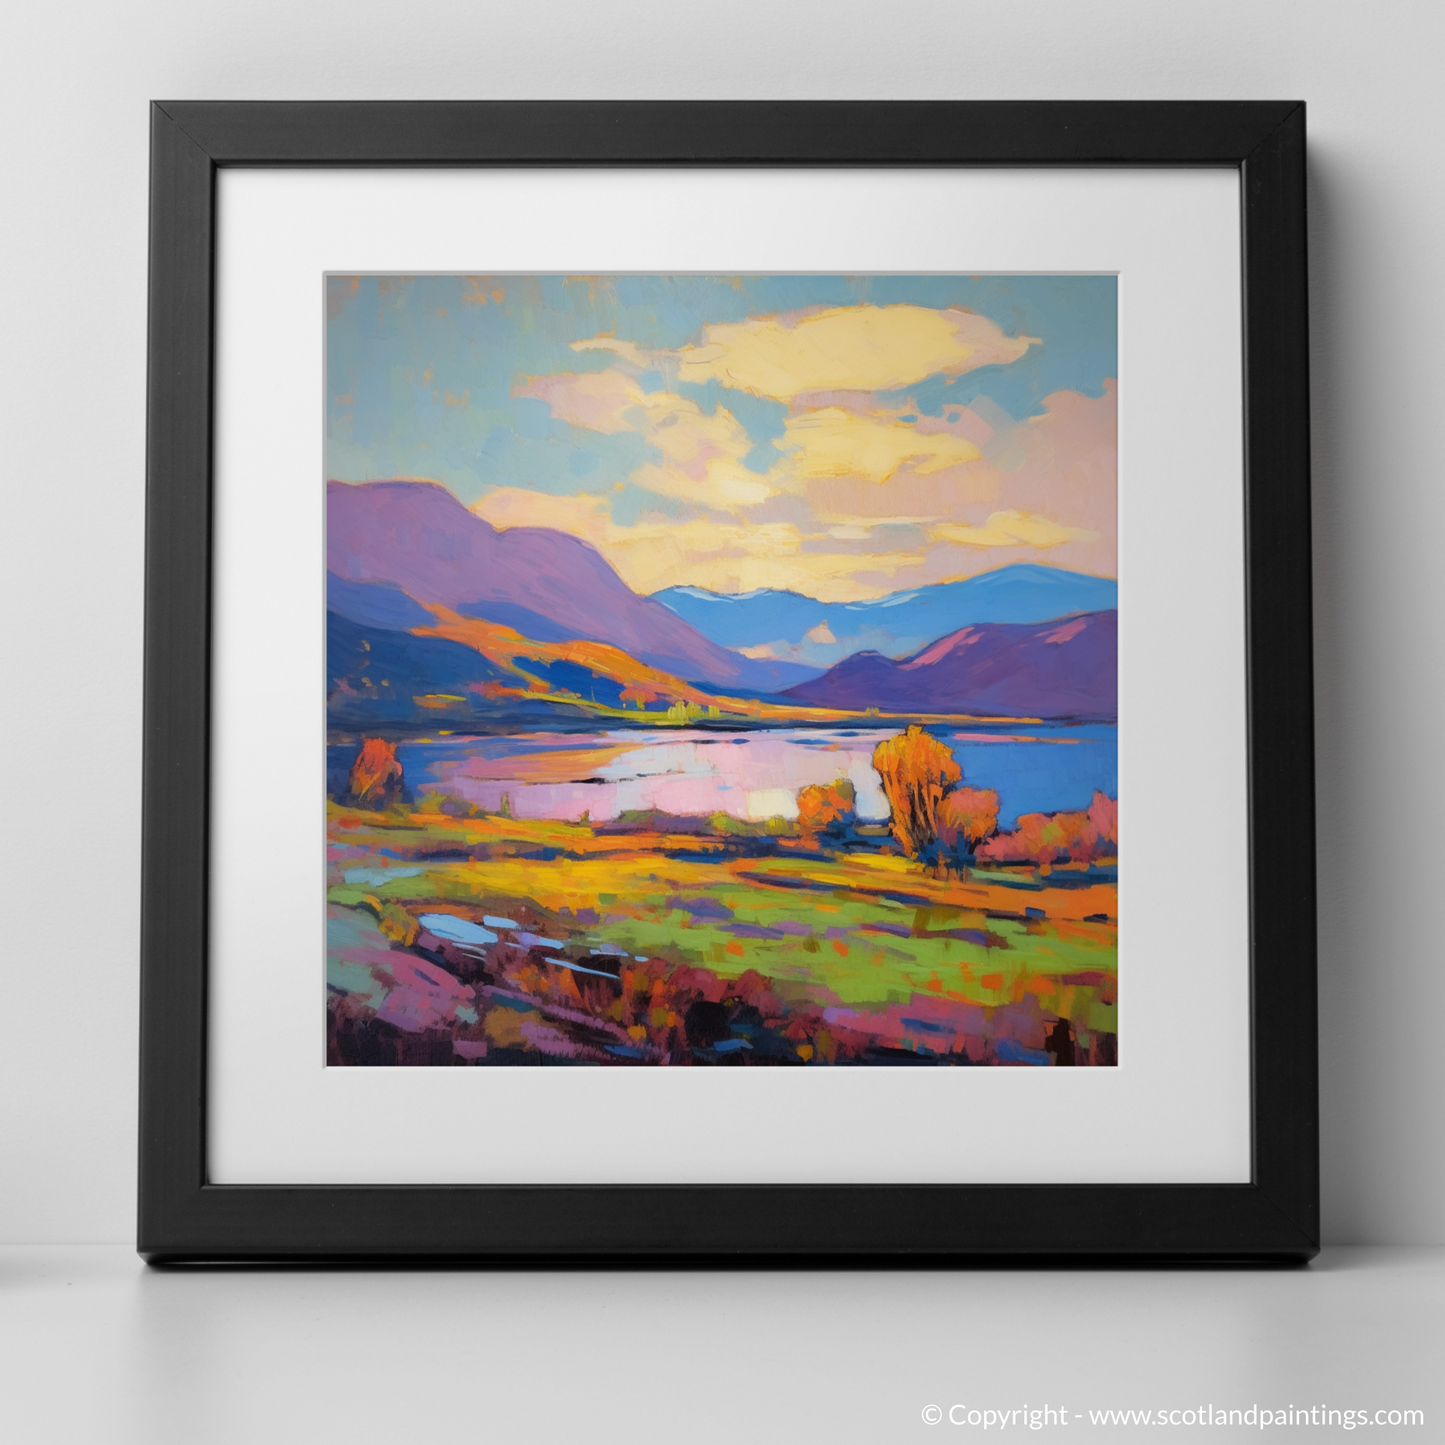 Highland Serenity: Sunset over Loch Insh